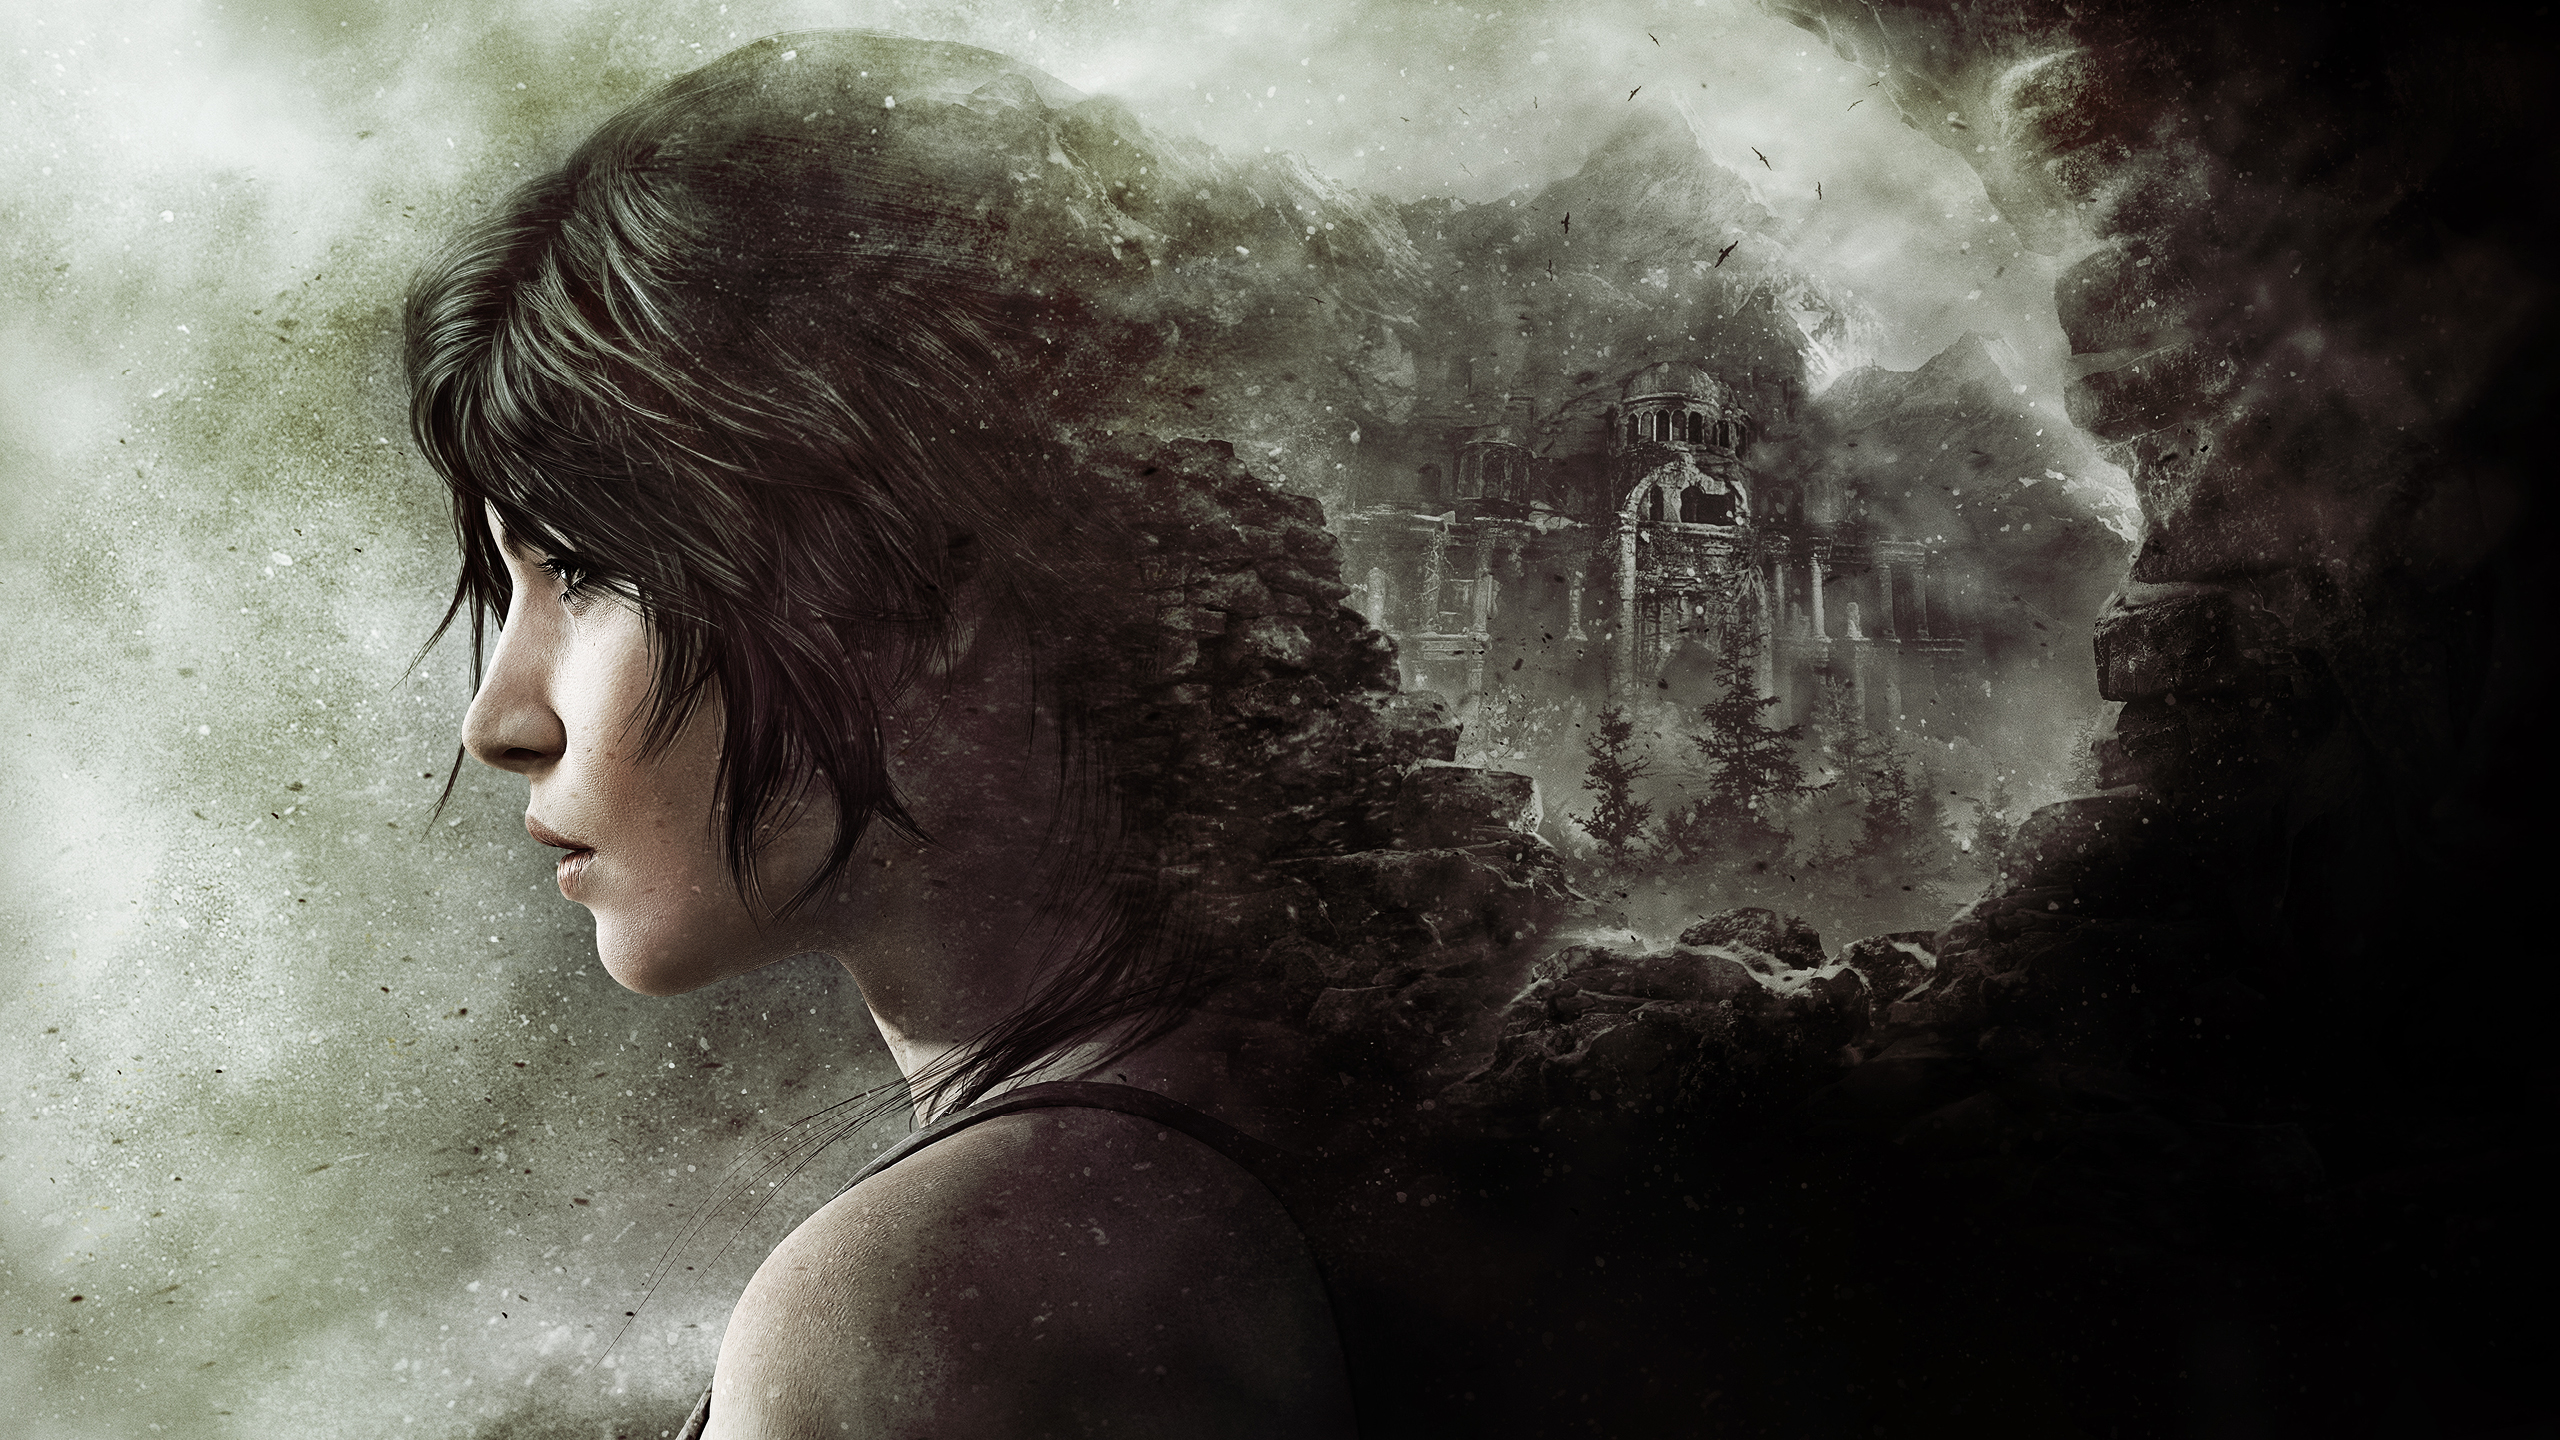 Rise of the Tomb Raider Lara Croft